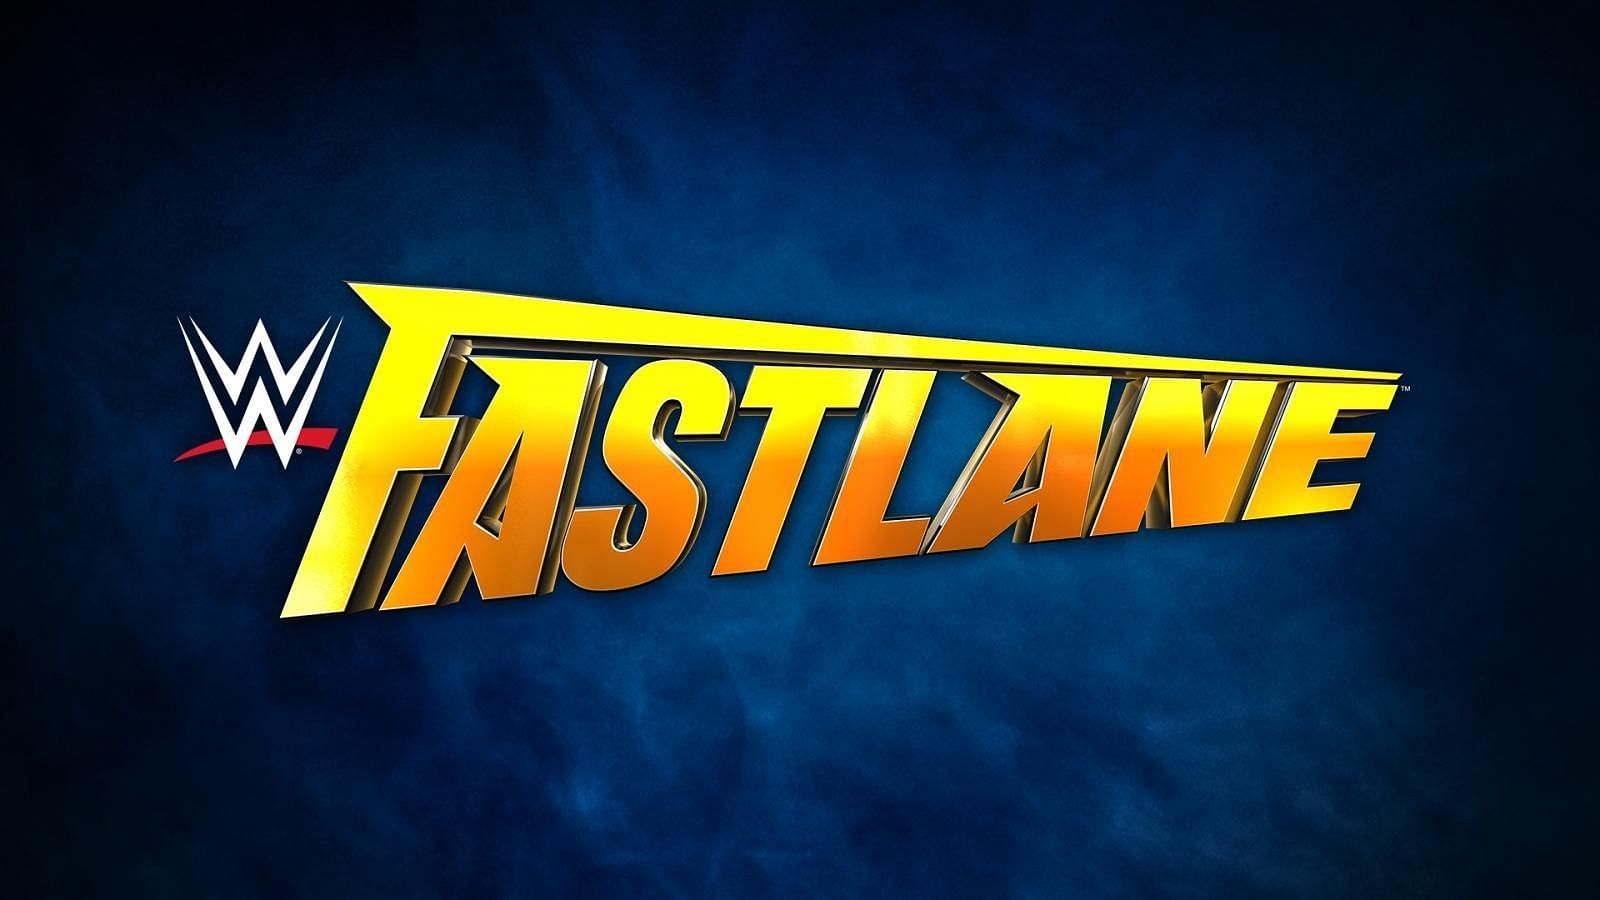 Fastlane took place last night in Indianapolis.